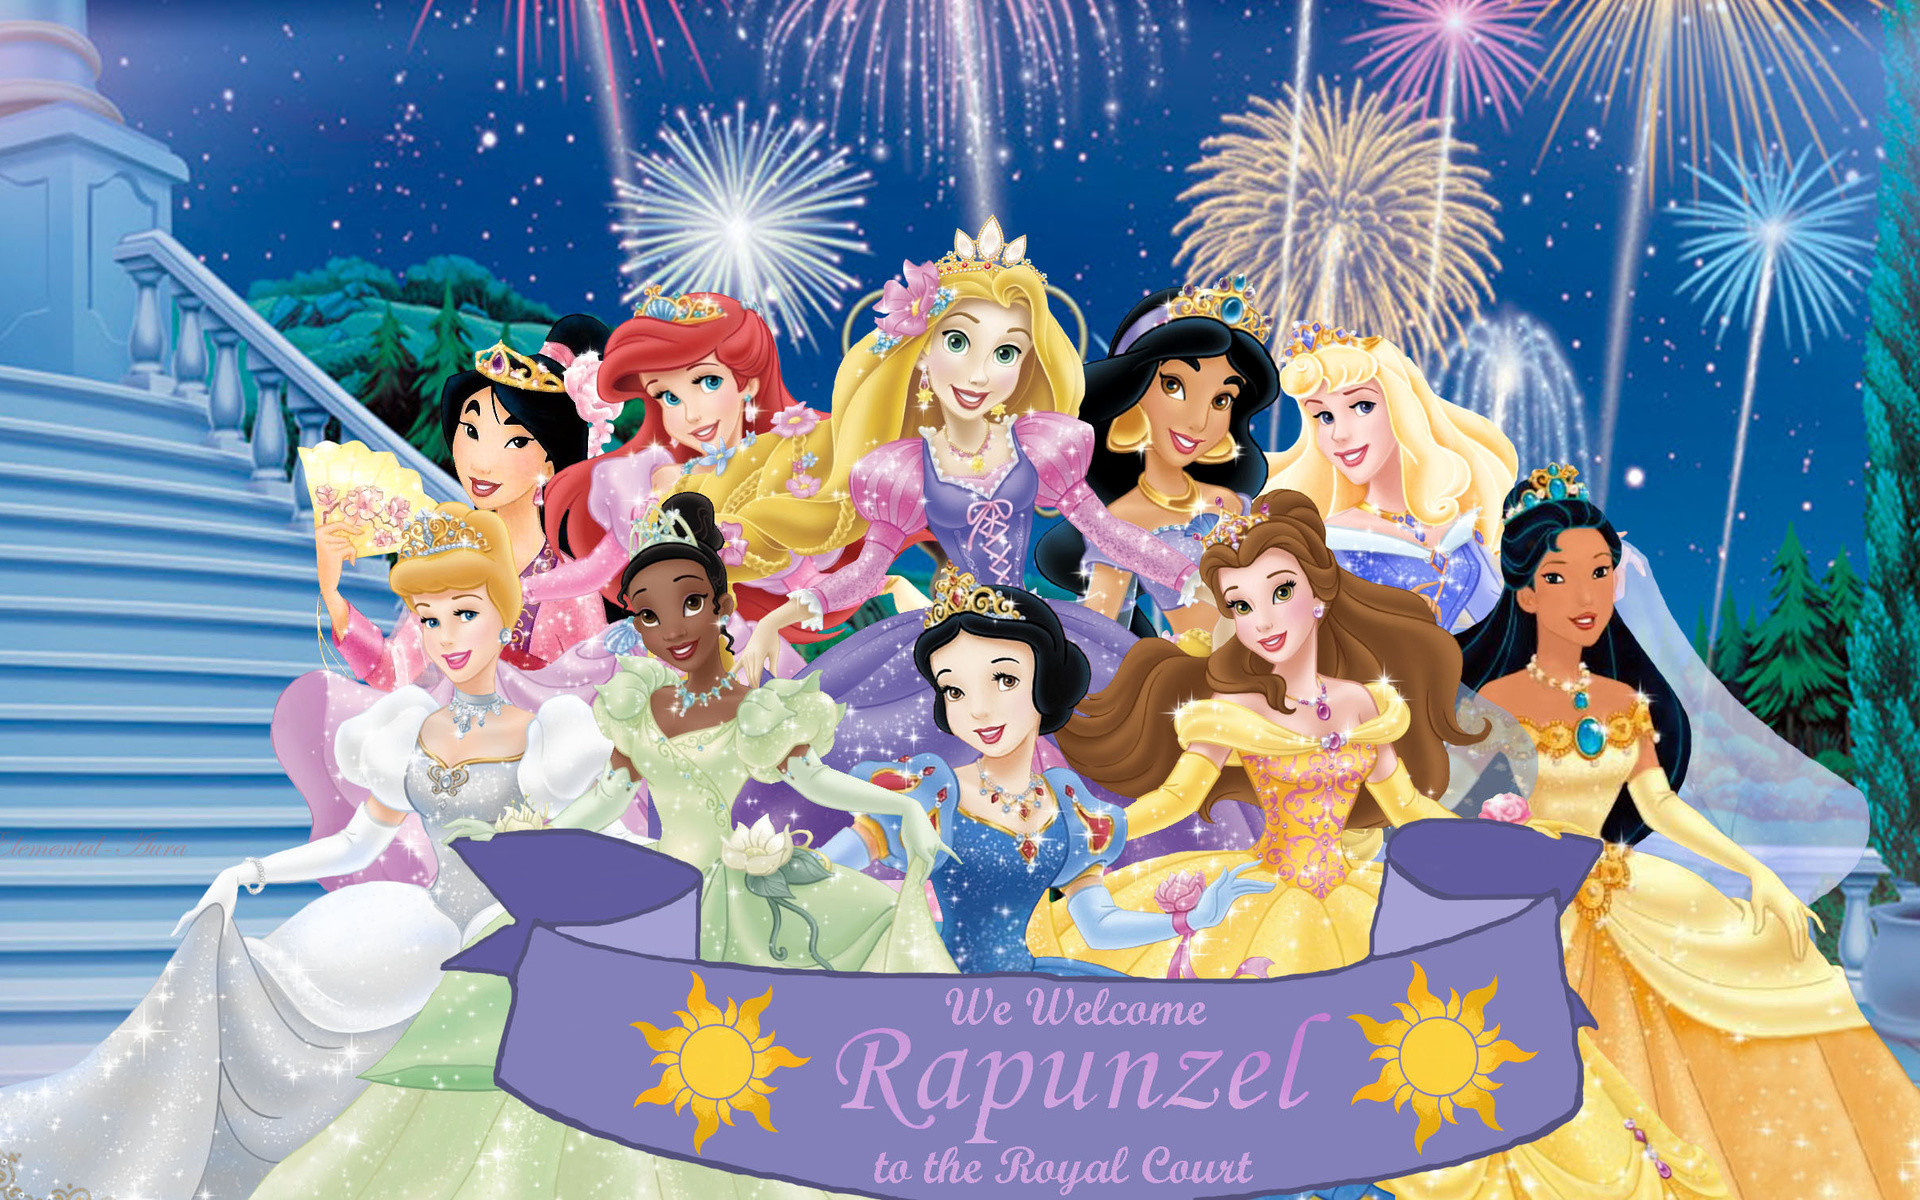 Princess Background Images  Free Download on Freepik